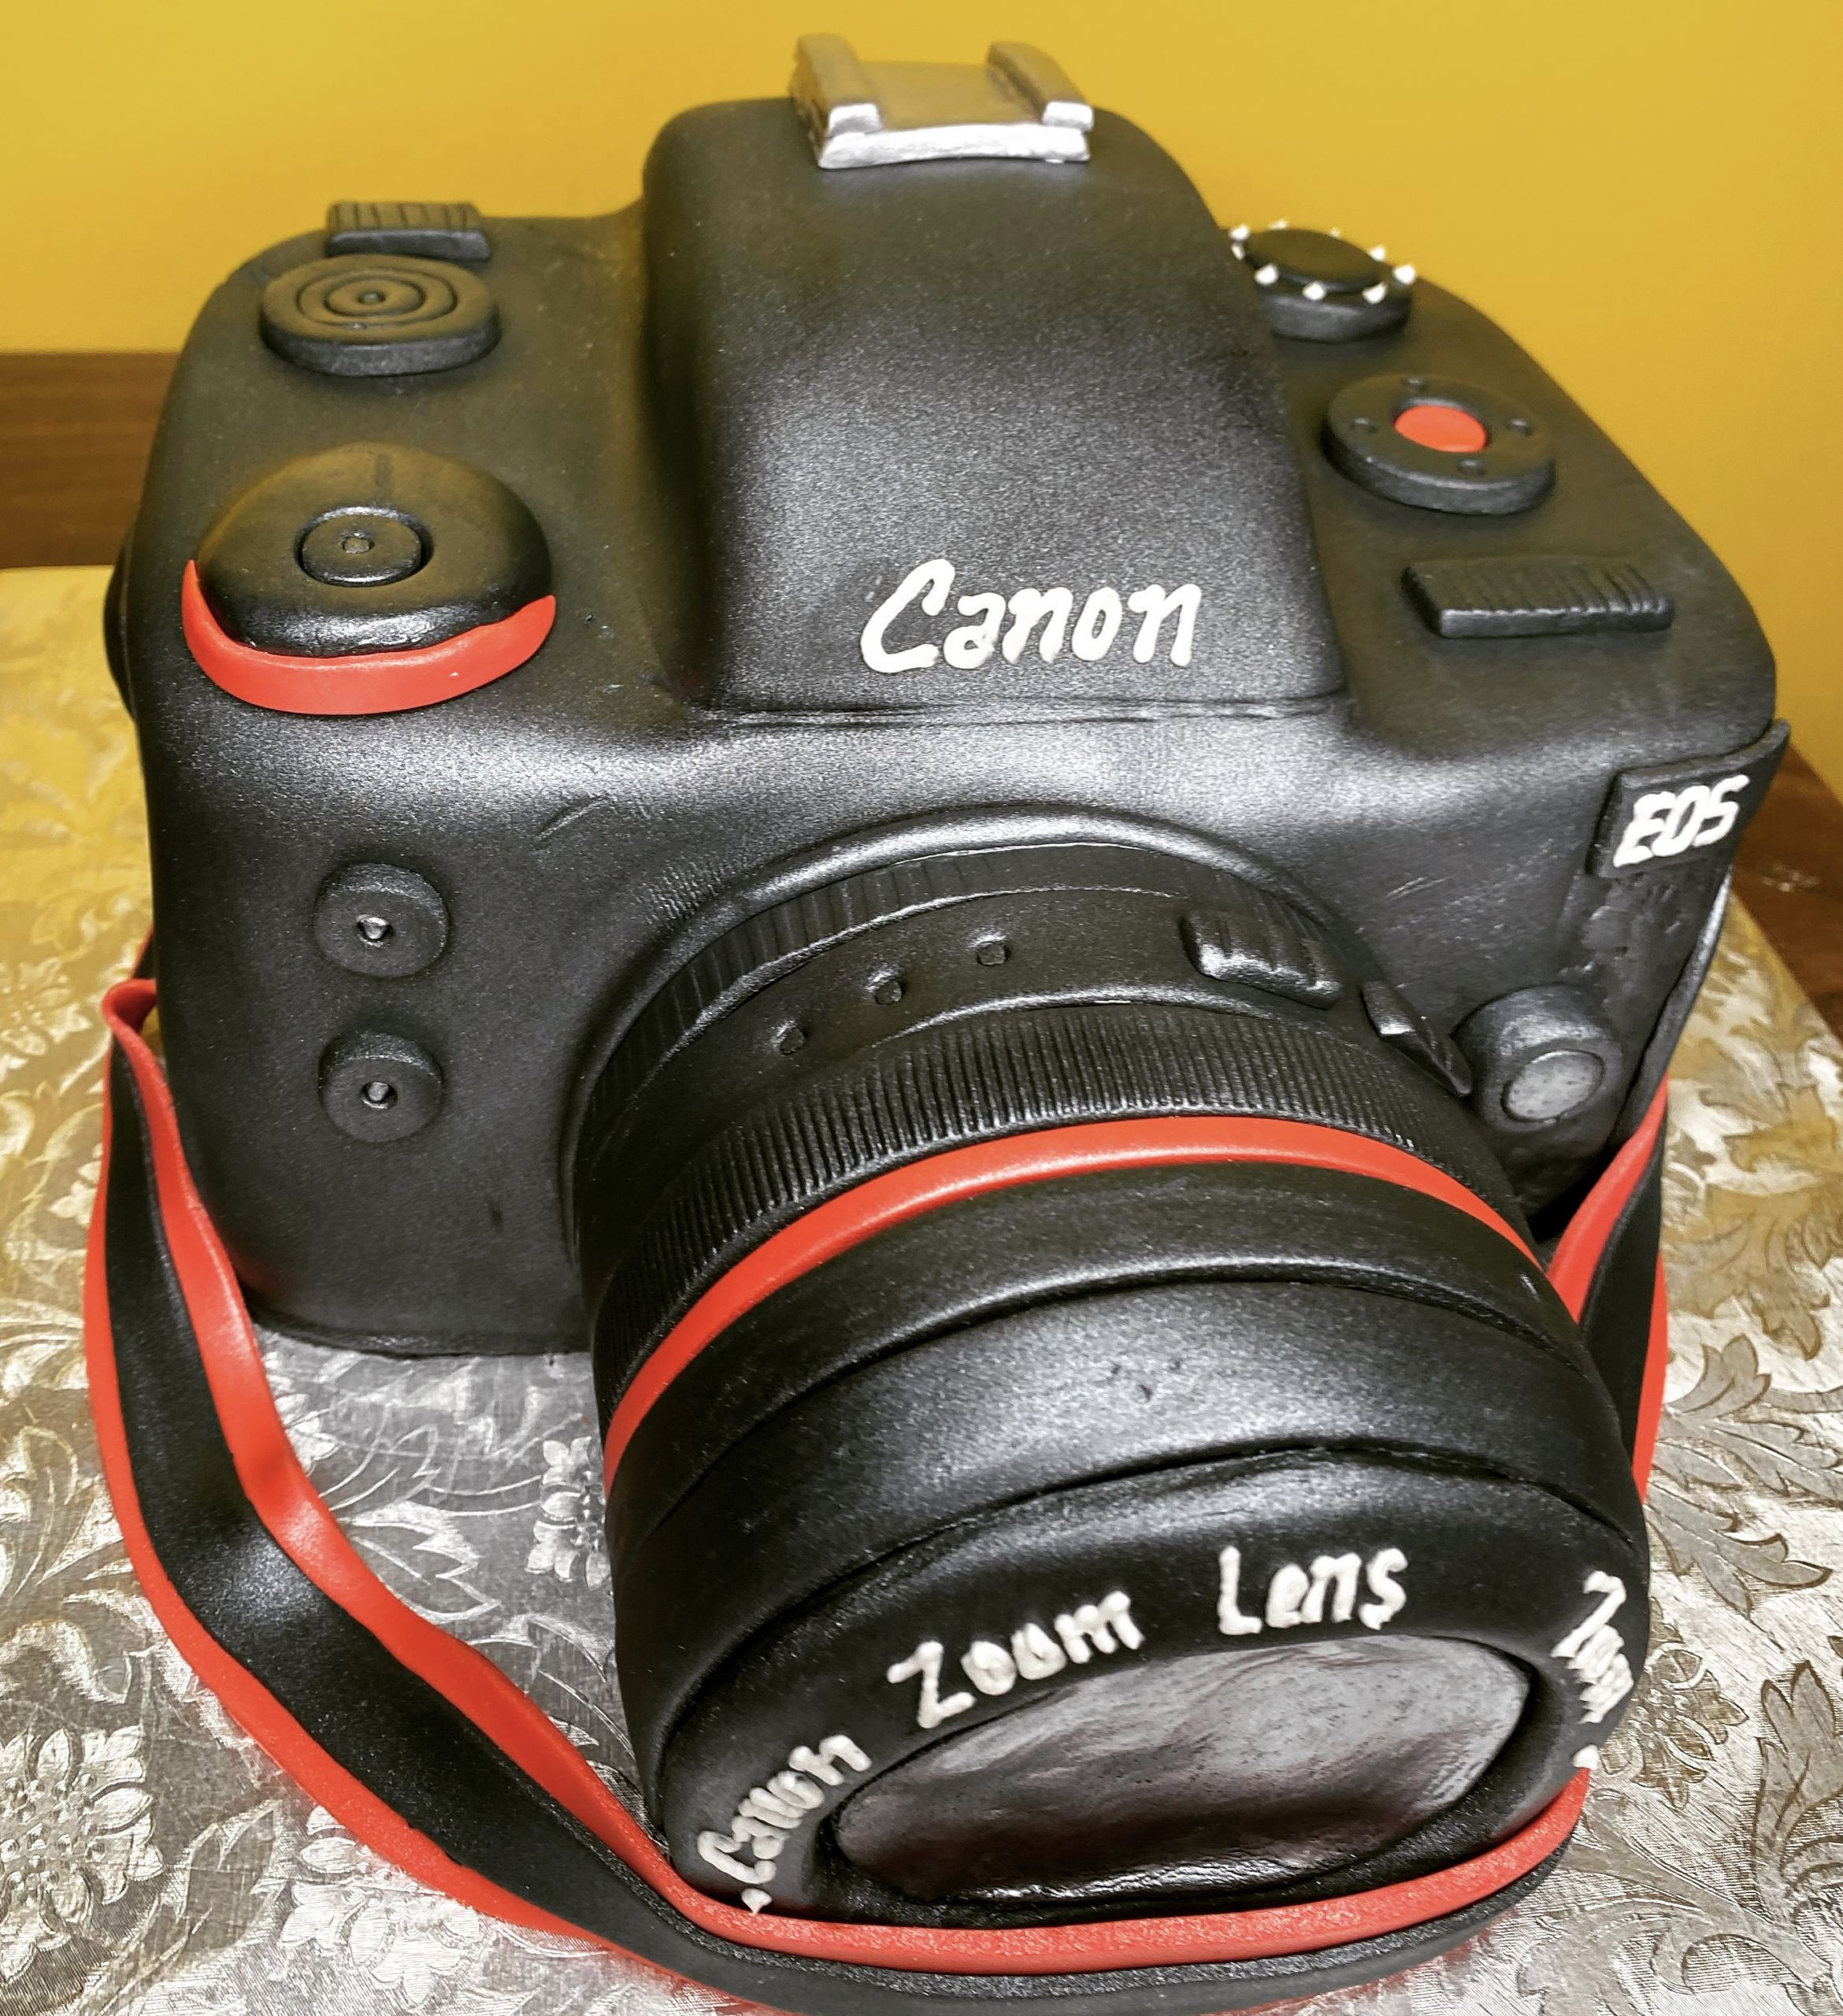 A camera shaped cake from Cretia Cakes